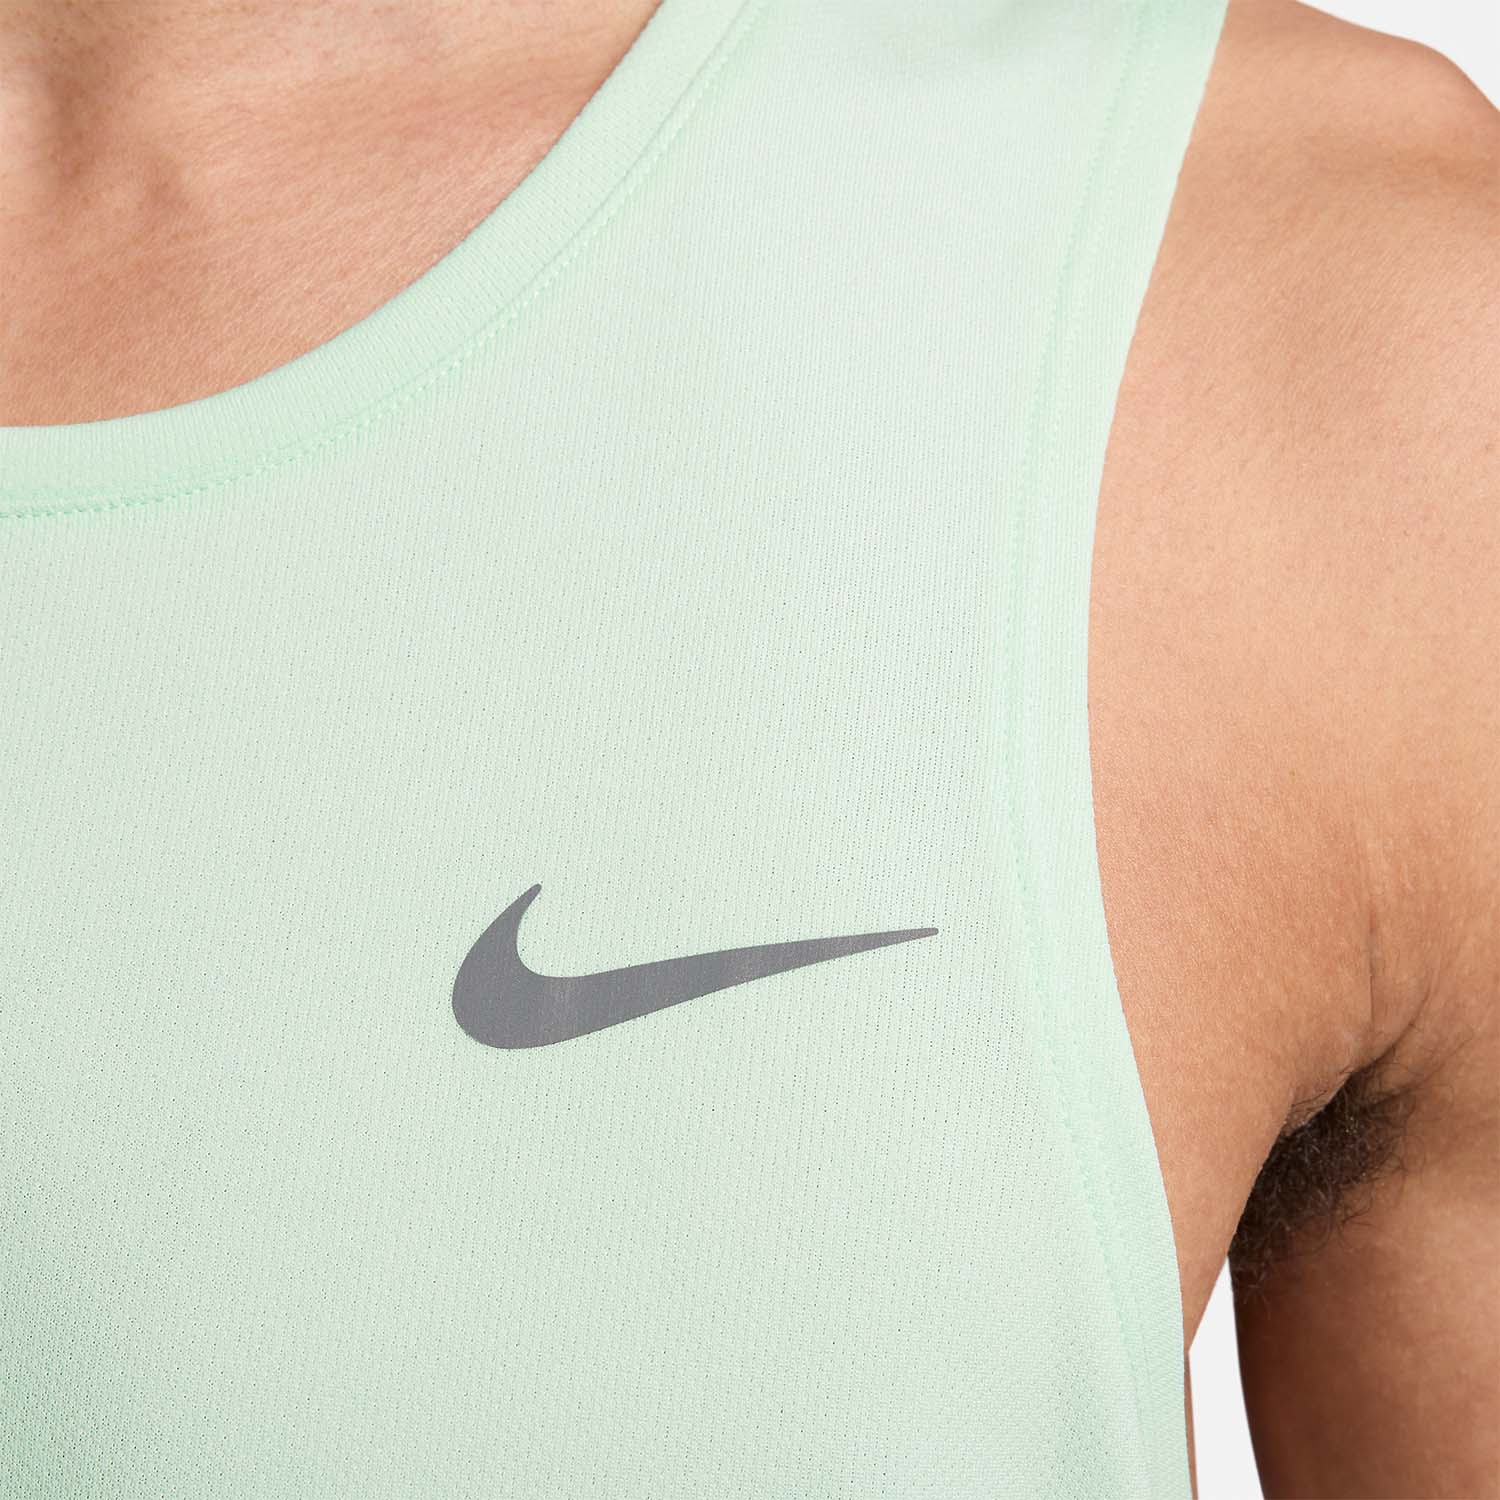 Nike Flash Miler Top - Barely Green/Reflective Silver